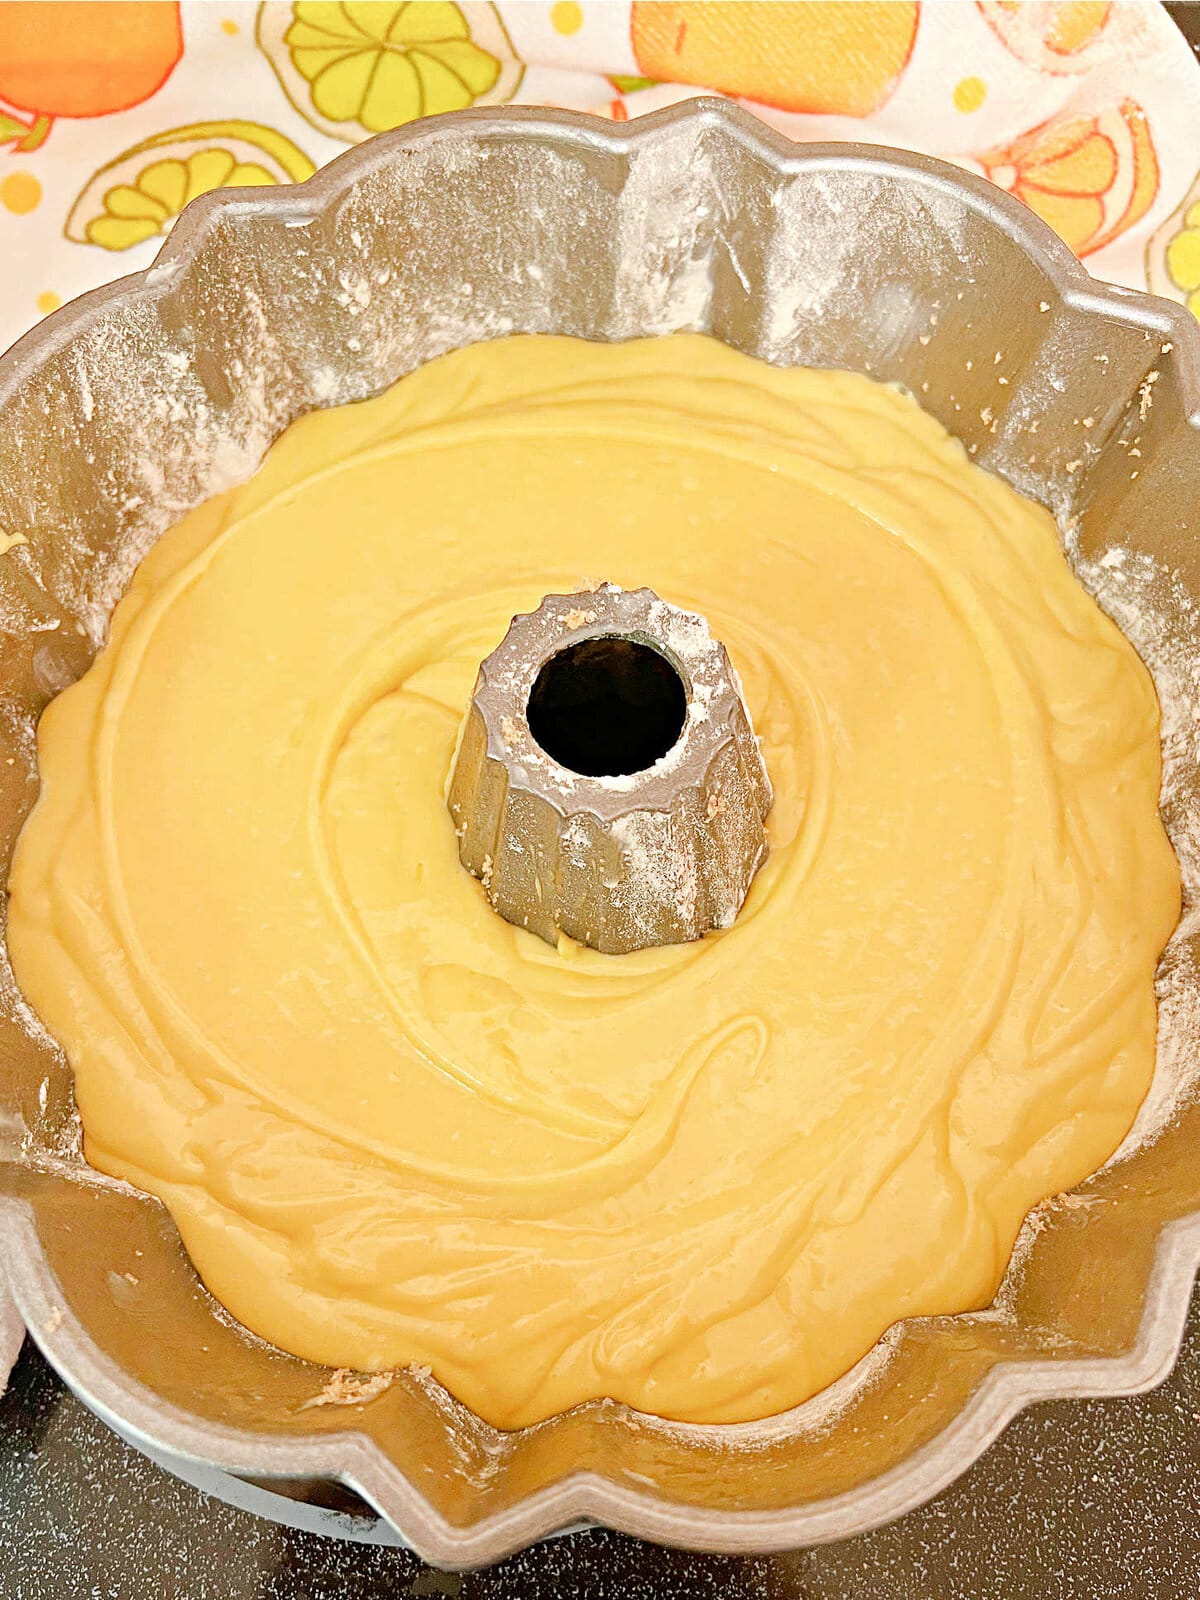 Easy Pineapple Upside Down Bundt Cake - My Cake School